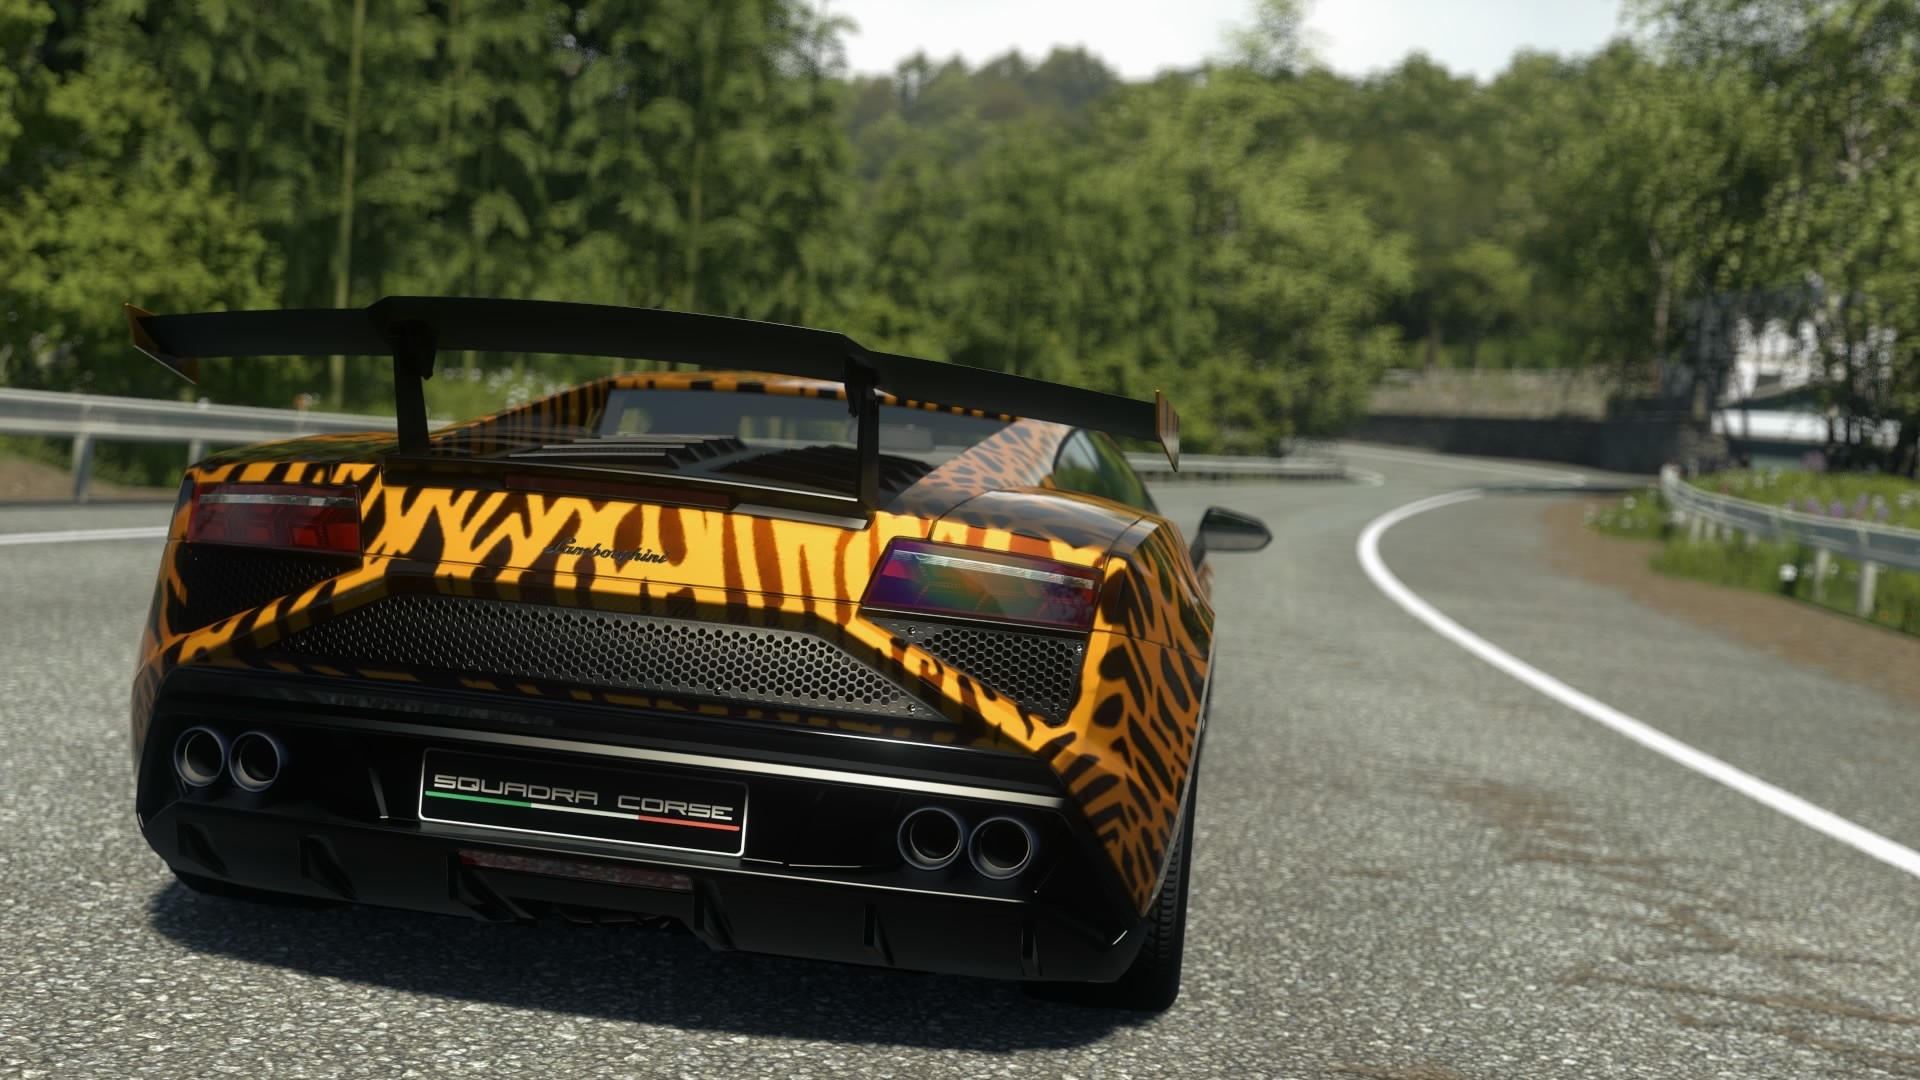 General 1920x1080 car Driveclub racing video games Lamborghini road asphalt supercars yellow cars vehicle